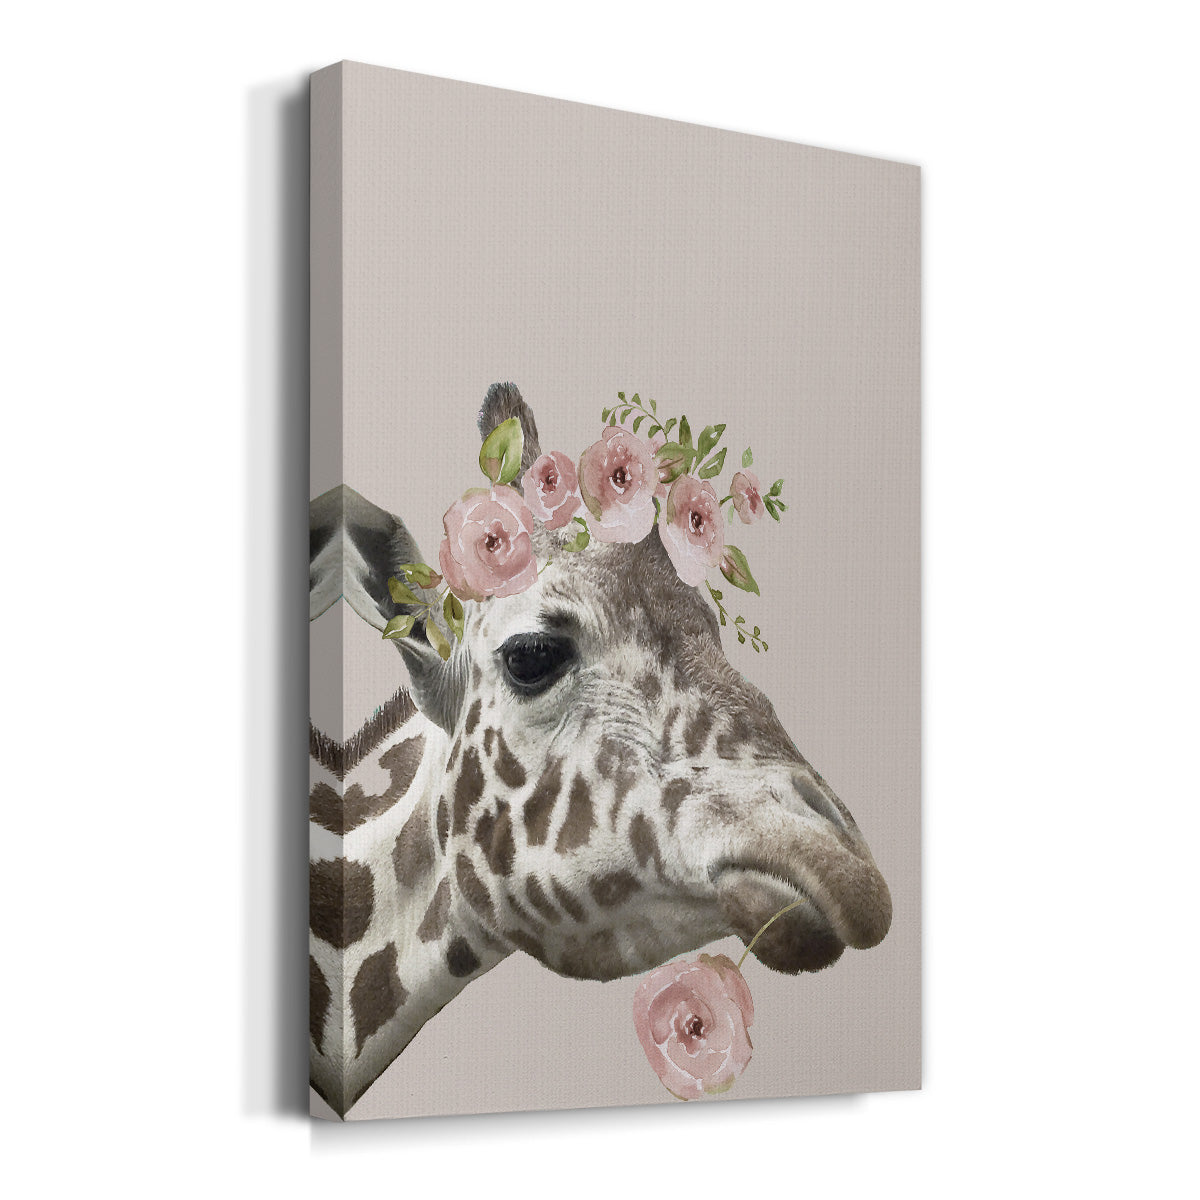 Peek A Boo Giraffe II Premium Gallery Wrapped Canvas - Ready to Hang